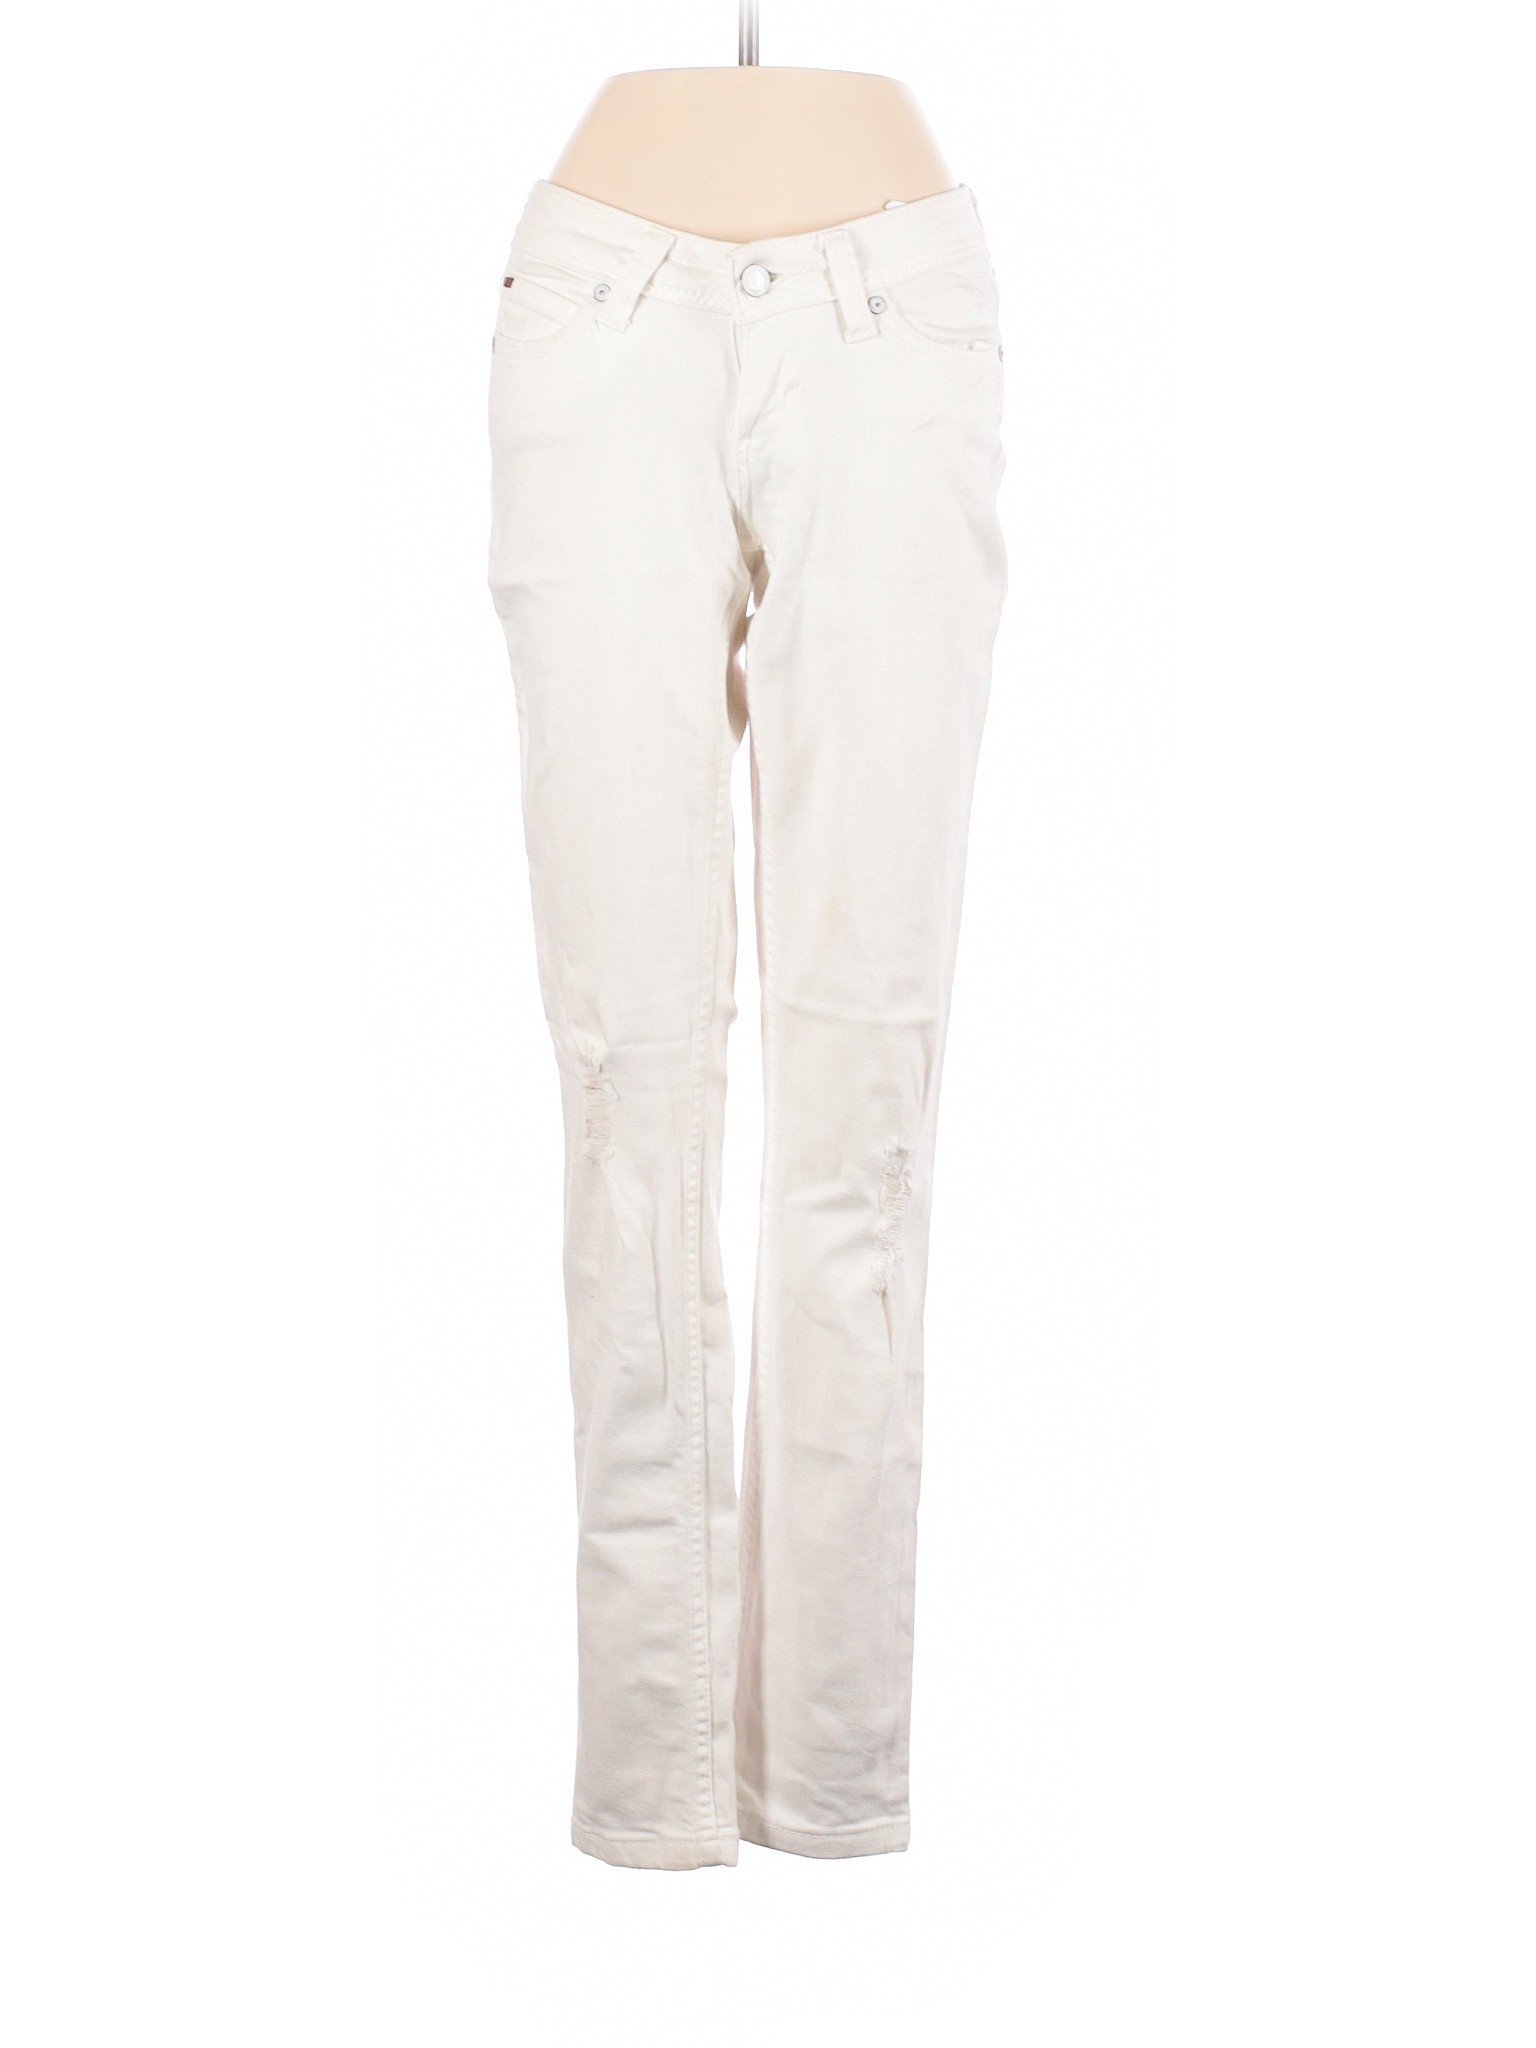 Levi's Women White Jeans 25W | eBay